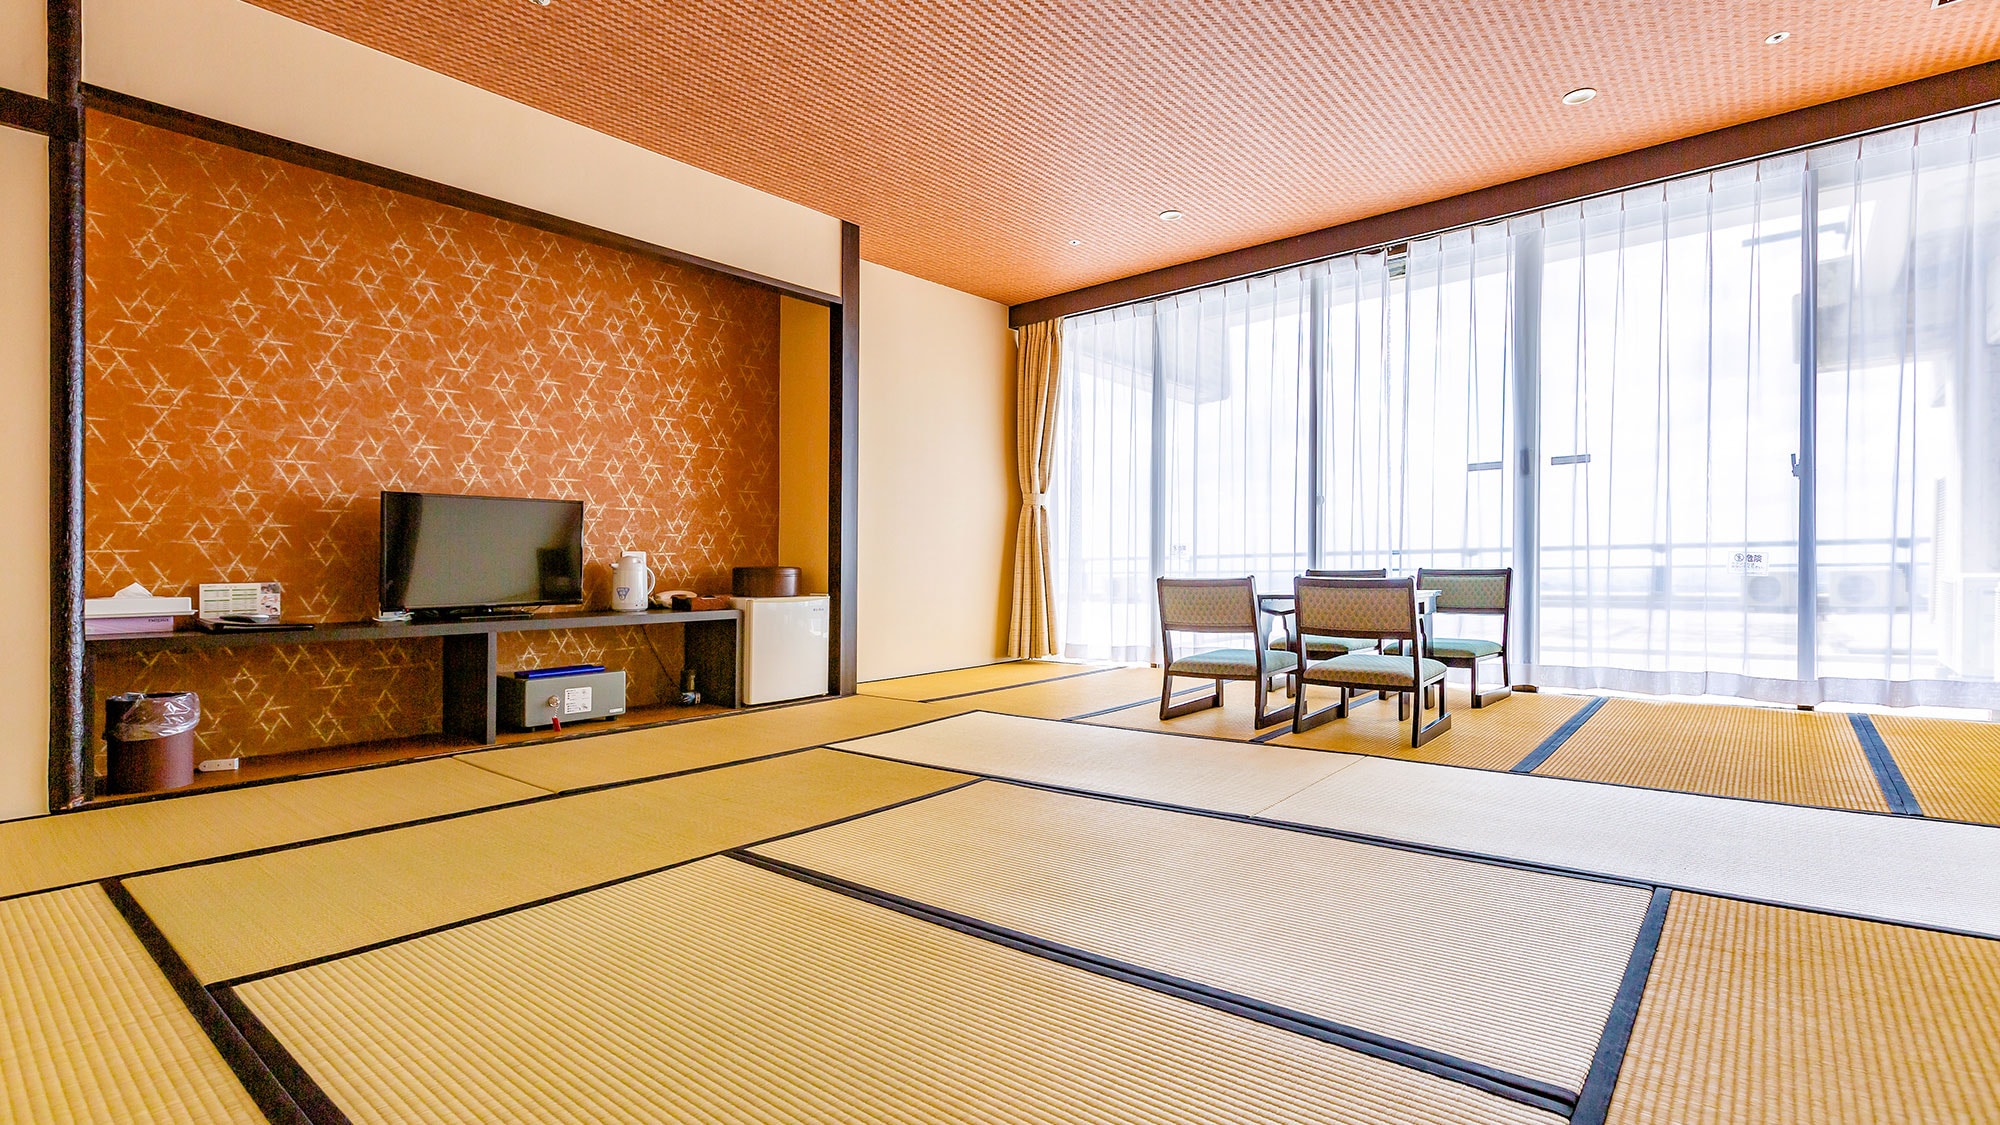 Smoking Japanese-style room 16 tatami mats *Image